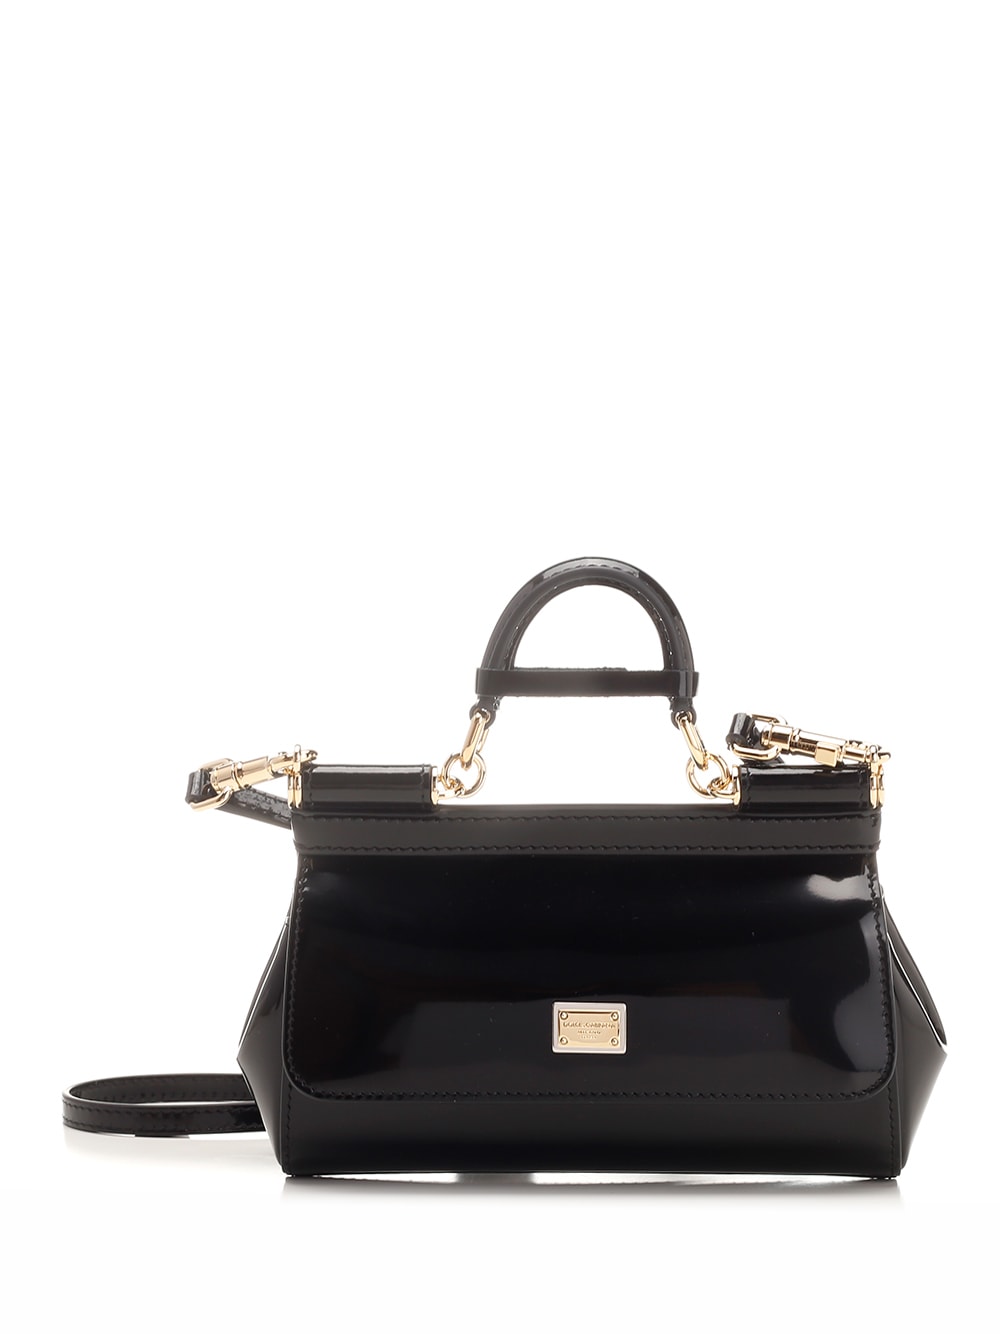 Dolce & Gabbana Sicily Small Hand Bag In Black